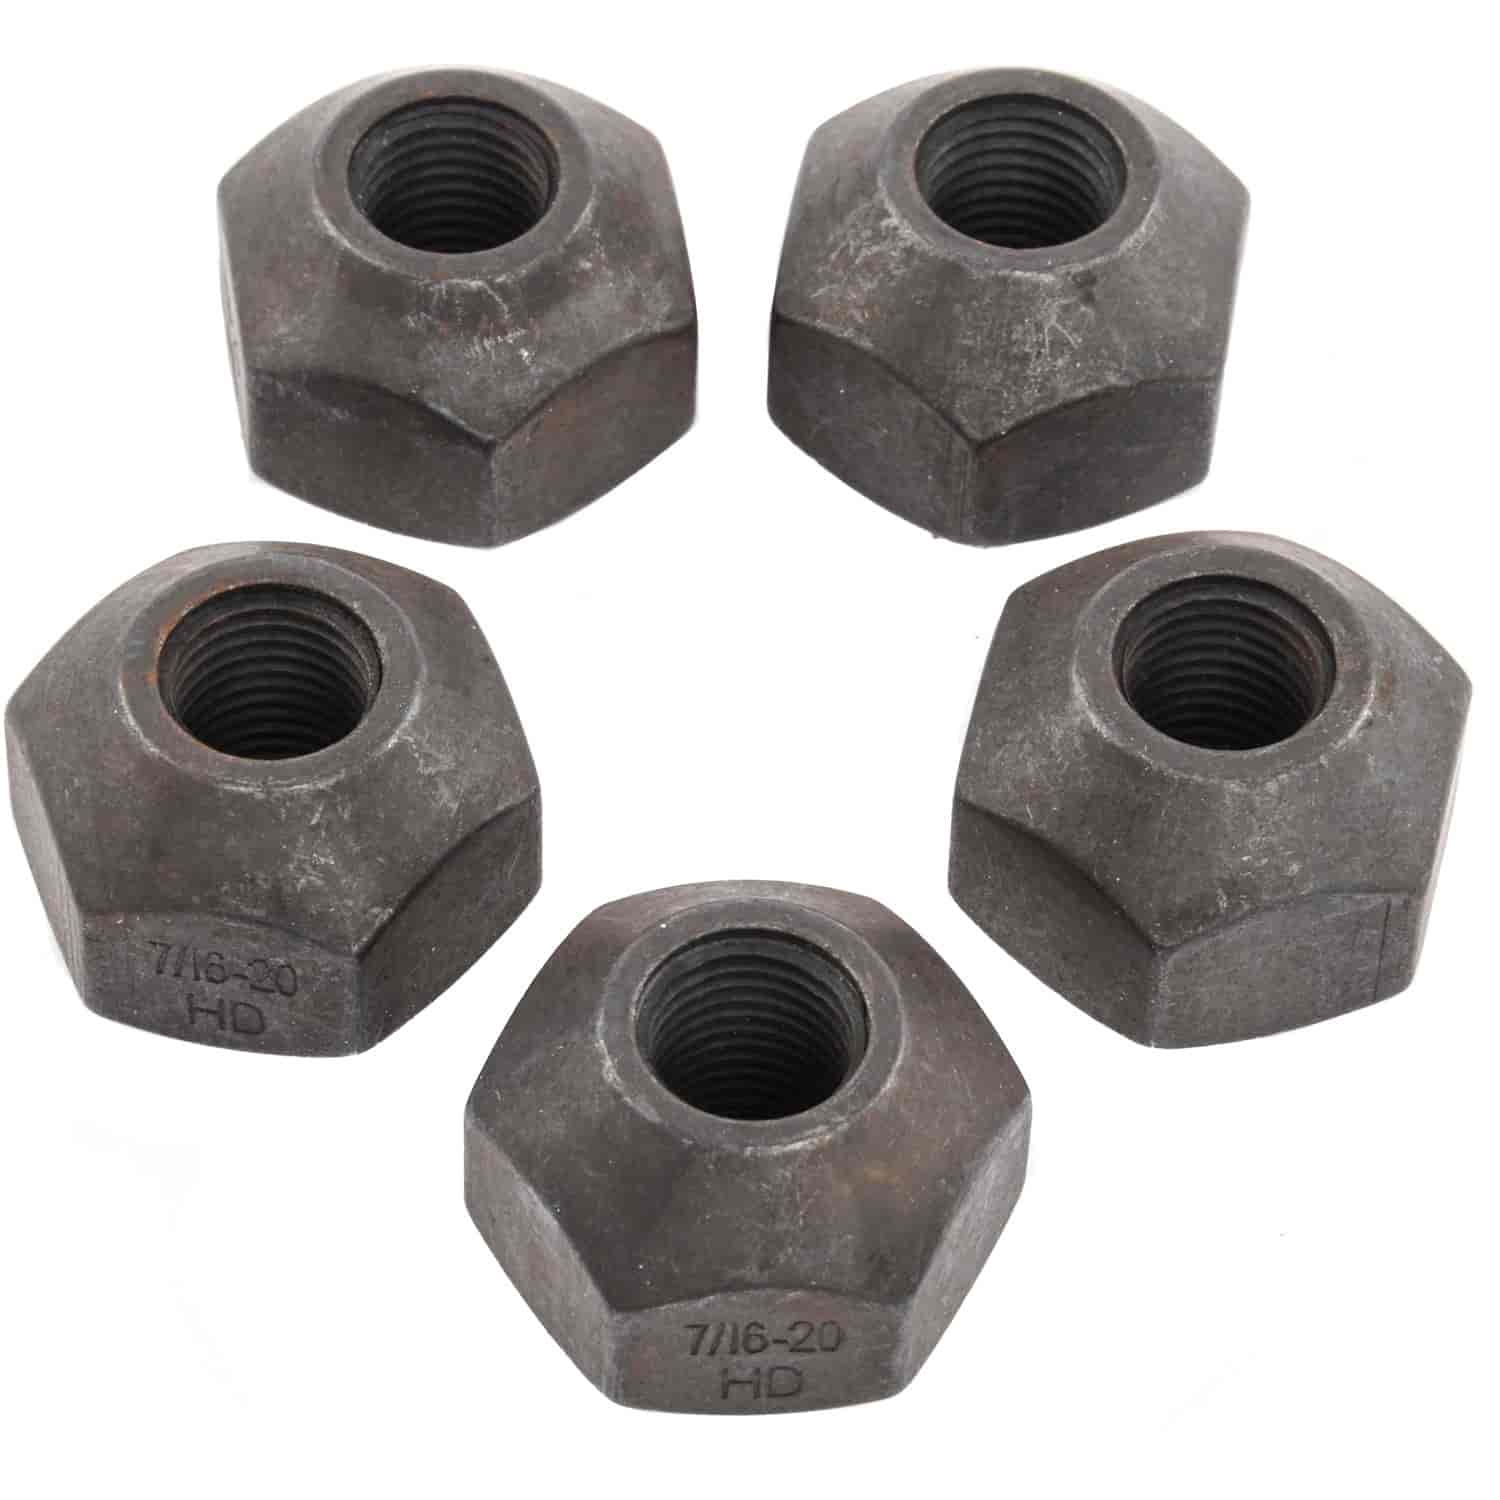 Single-Sided Heat-Treated Steel Lug Nuts [7/16 in.-20 Thread, 1 in. Hex] Set of 5